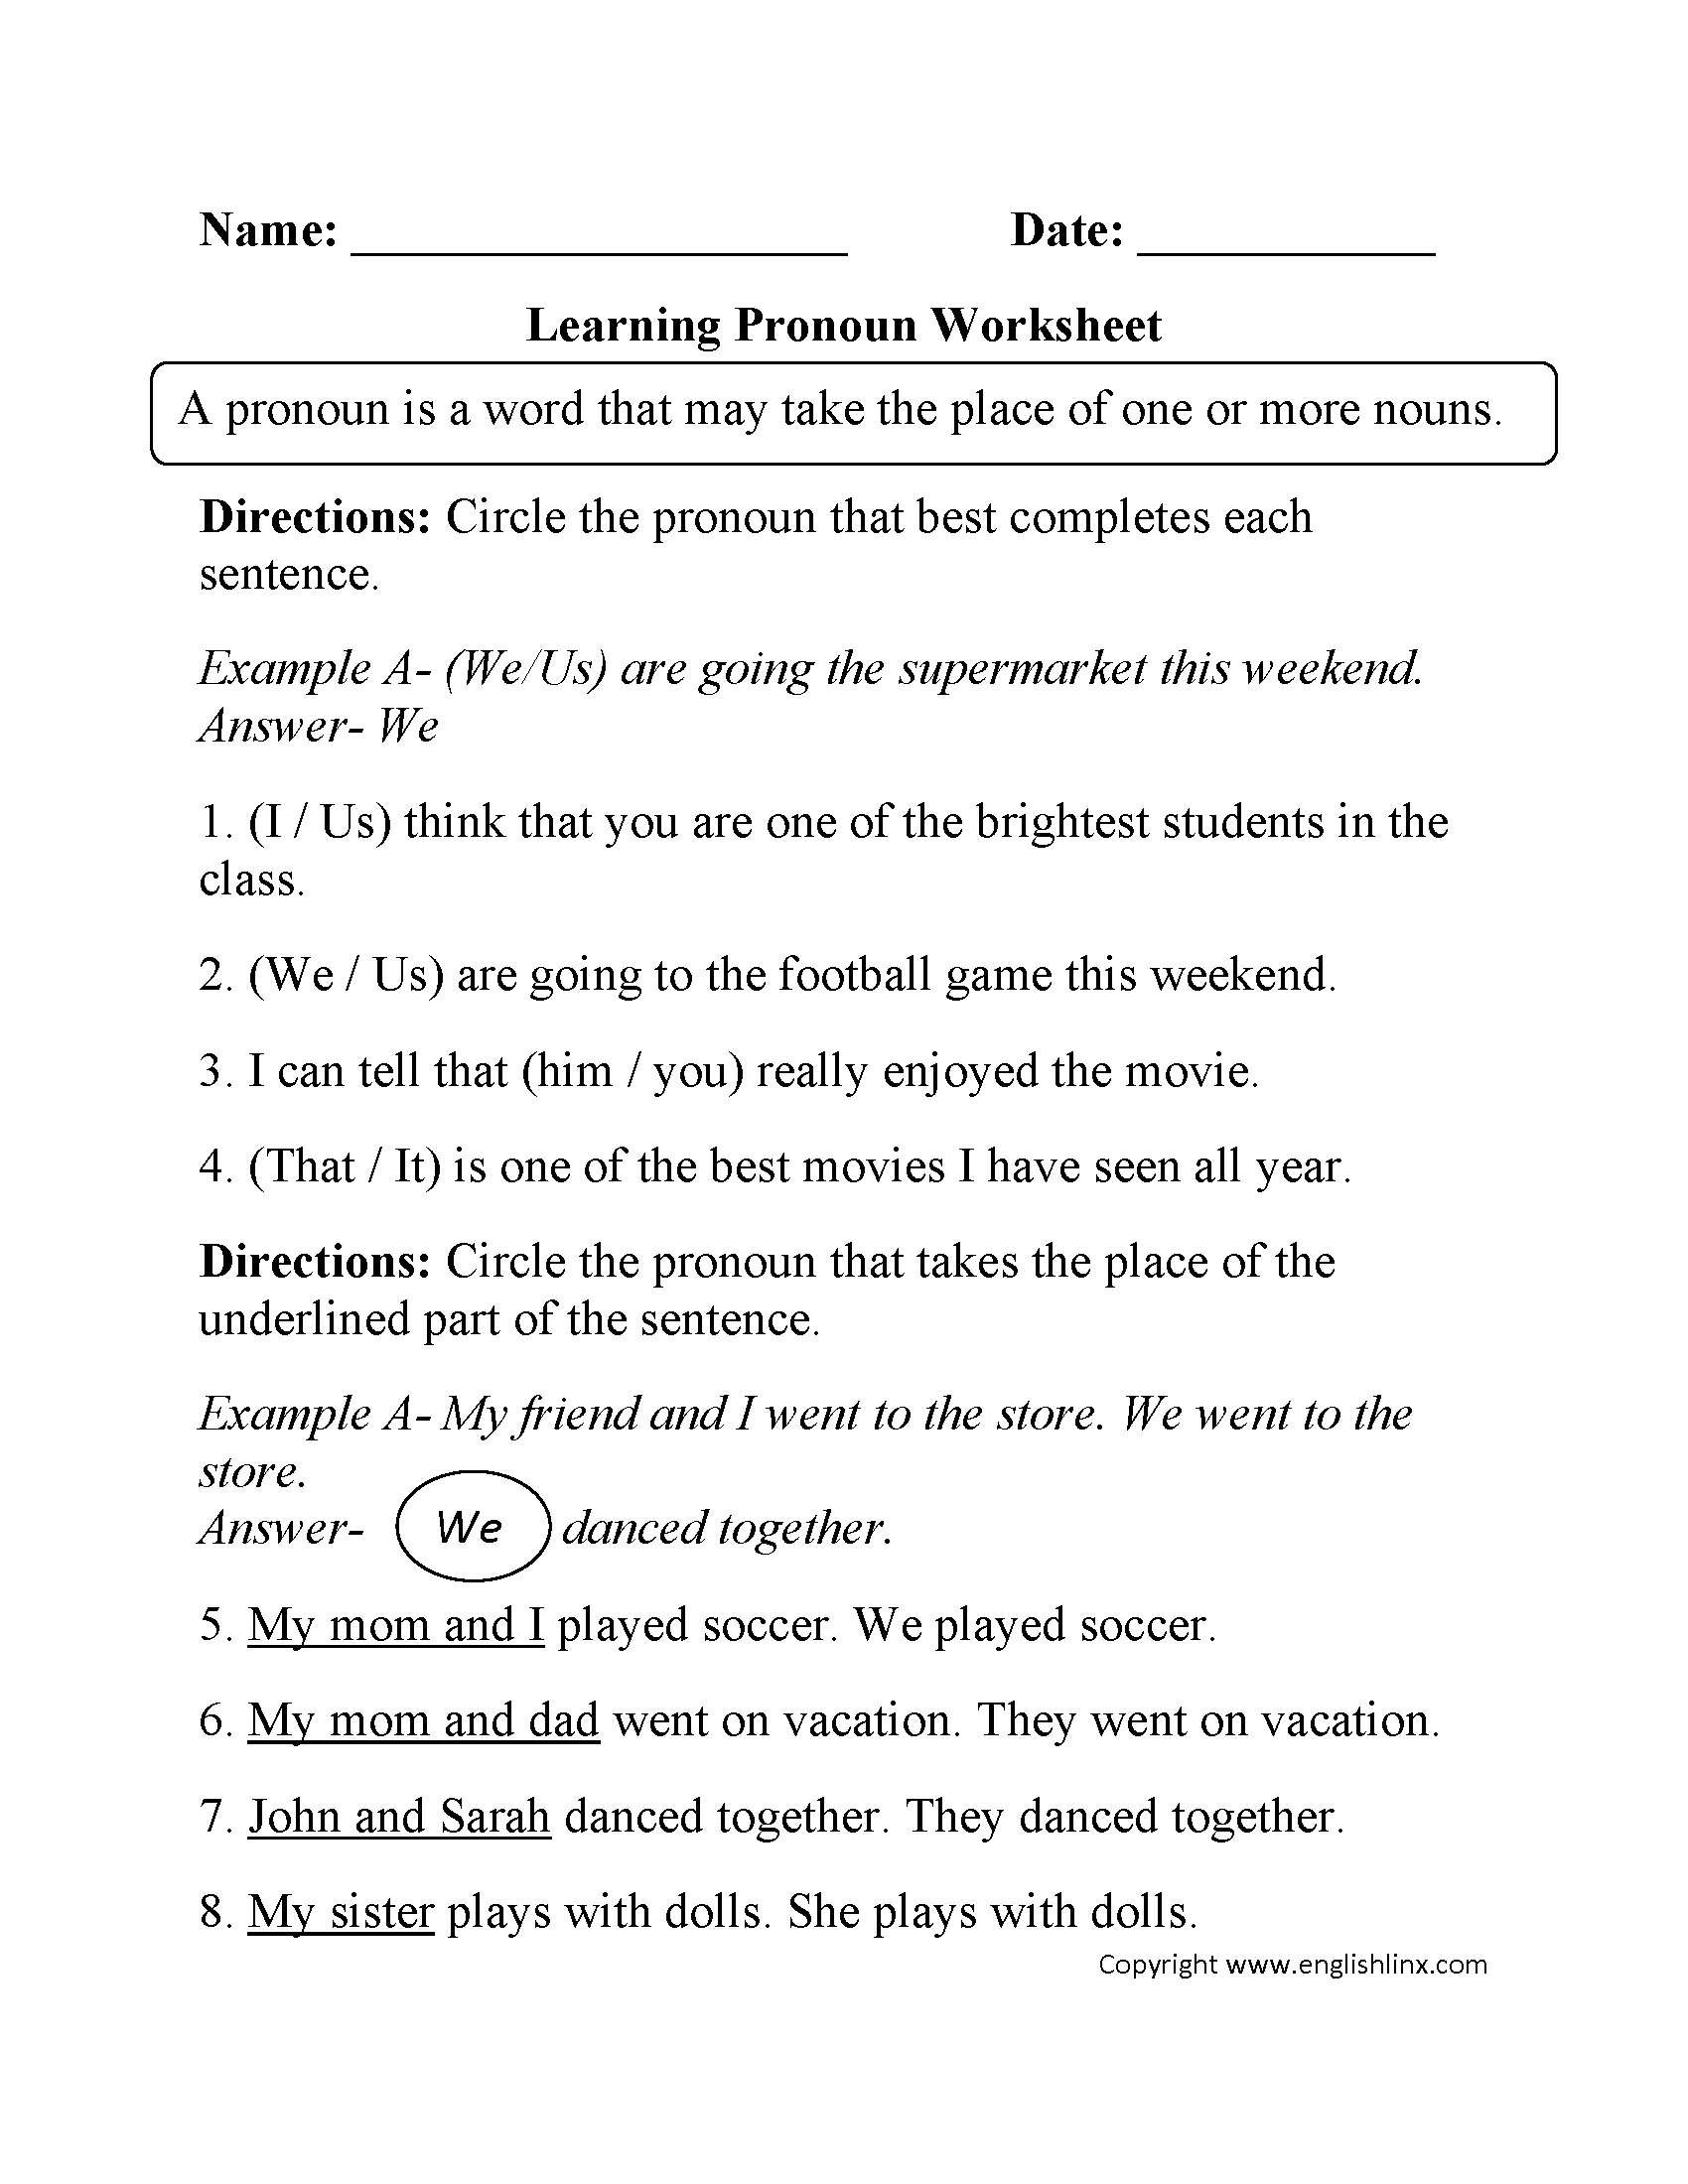 intensive-pronoun-worksheets